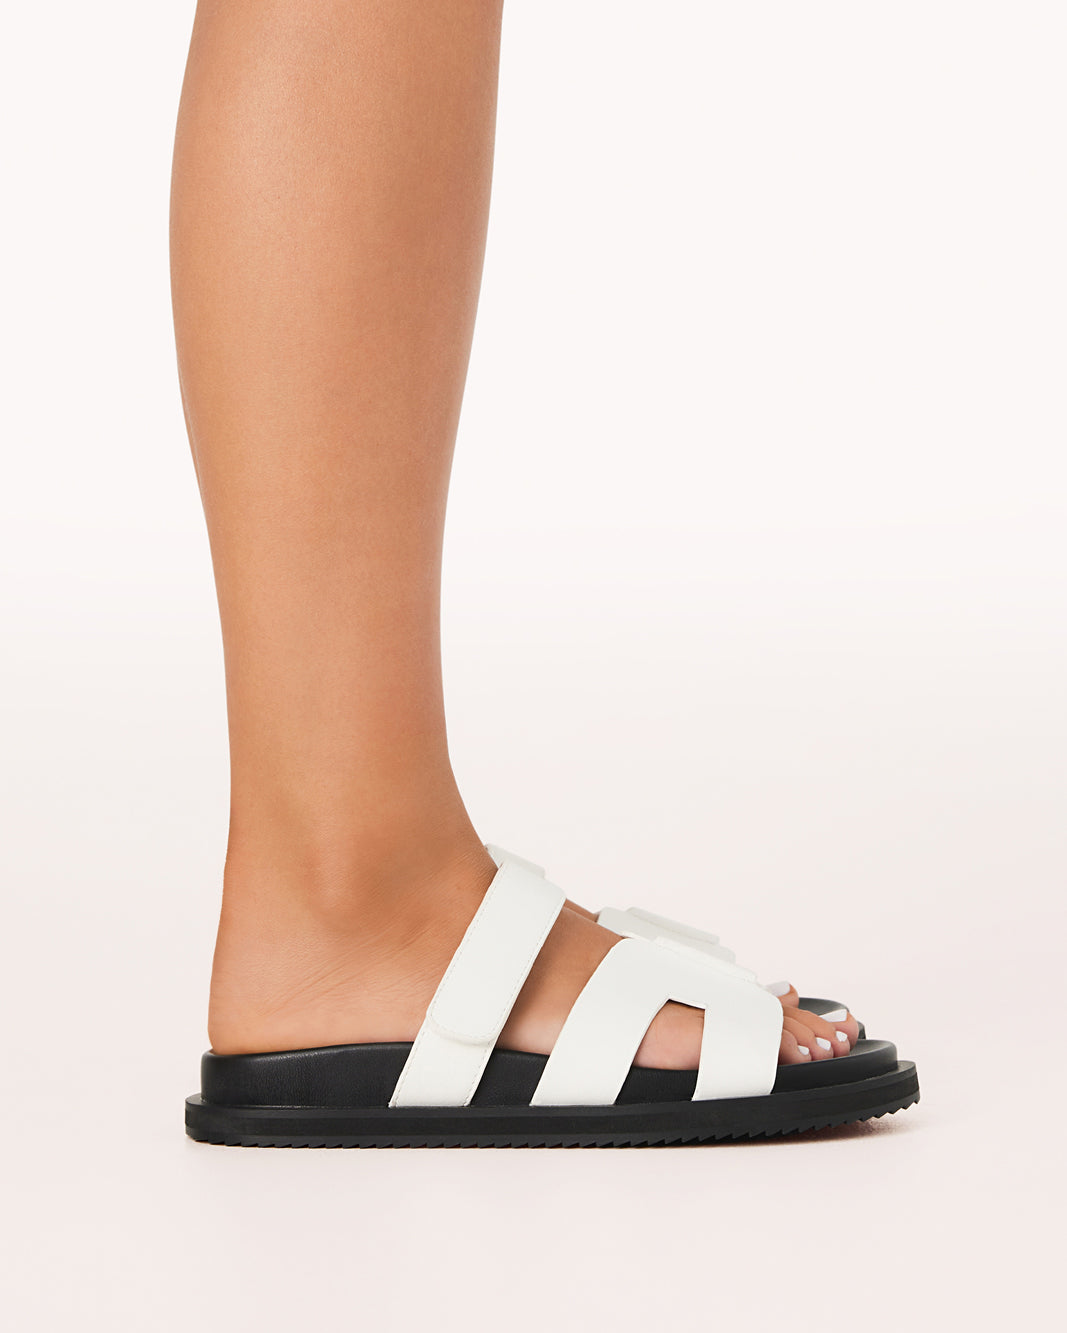 THEON - WHITE-Sandals-Billini-Billini